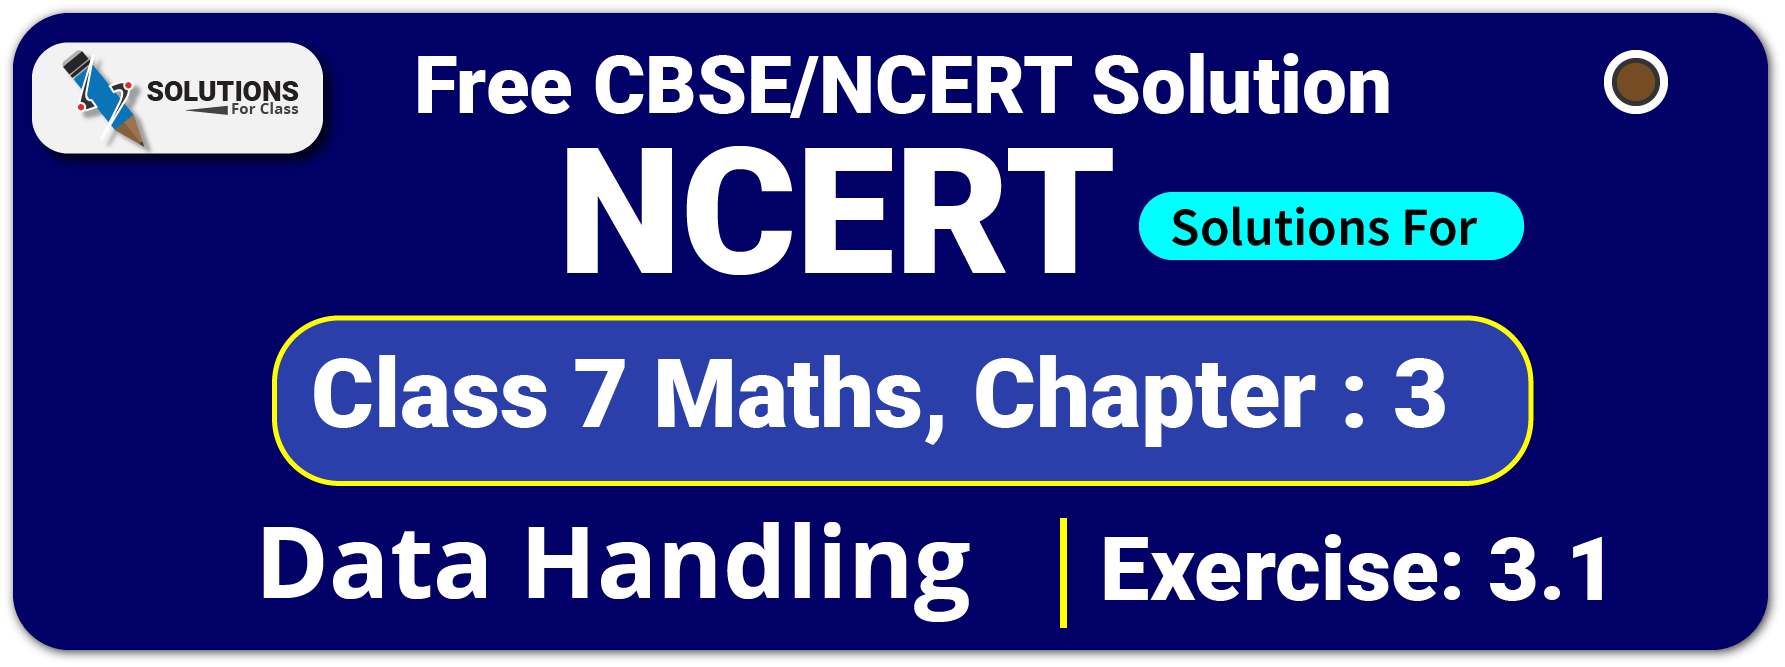 NCERT Solutions For Class 7 Maths Chapter 3, Data Handling, Exercise 3.1